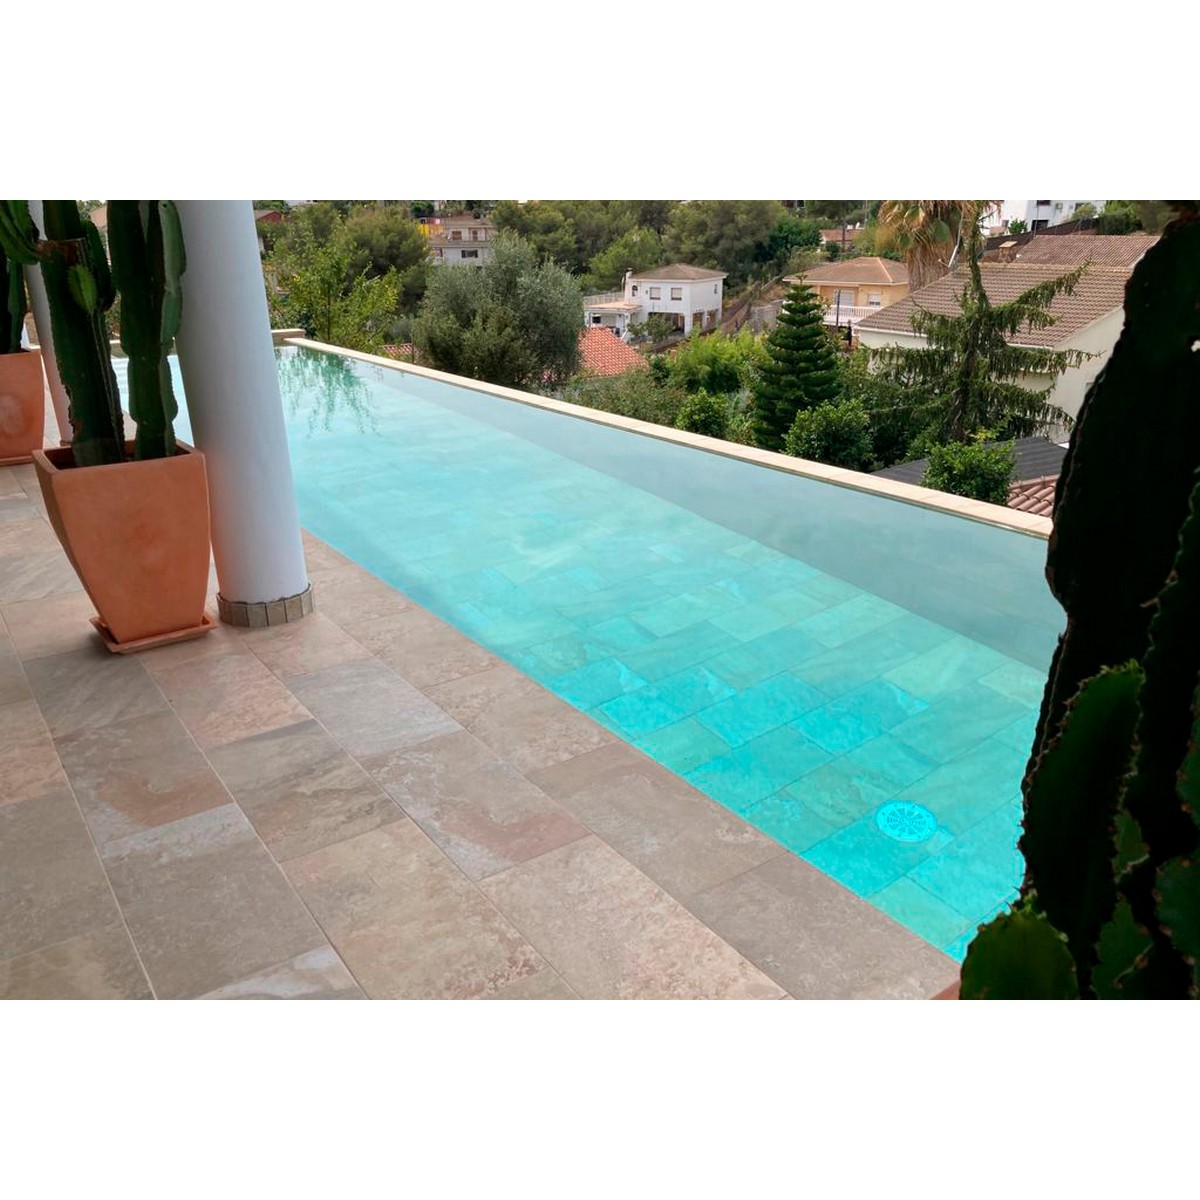 Foto de ambiente Pietro Golden - Exterior e interior da piscina